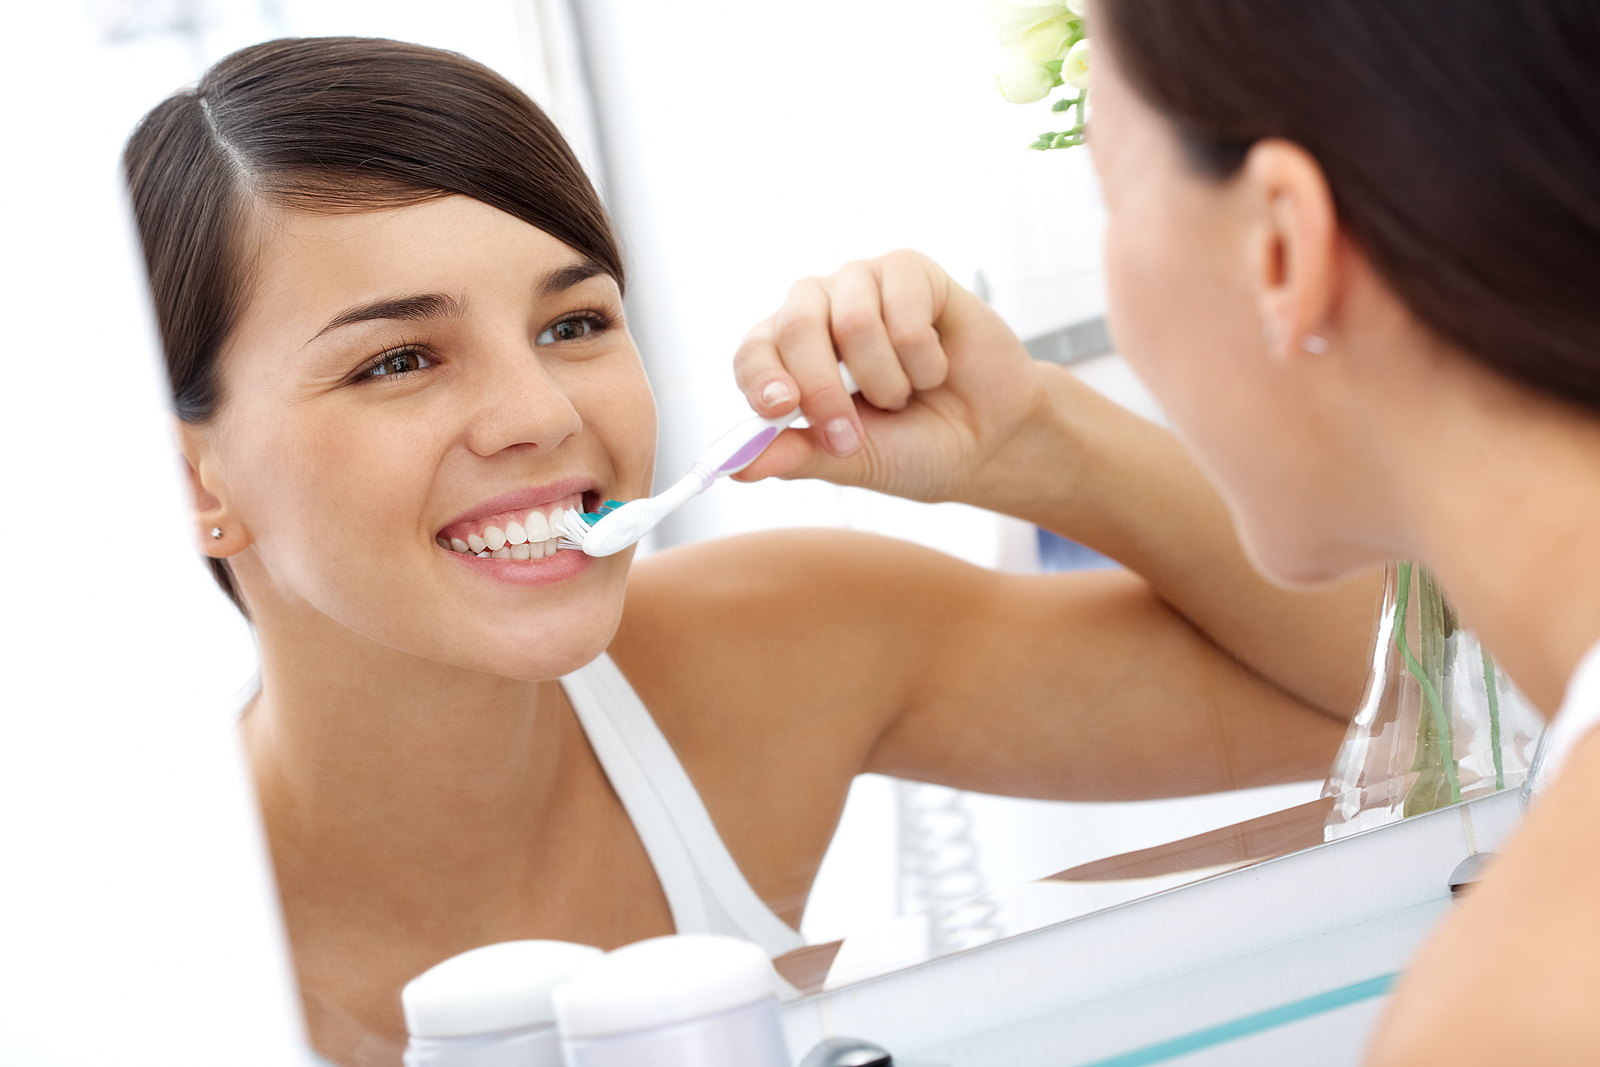 Dental care and hygiene 